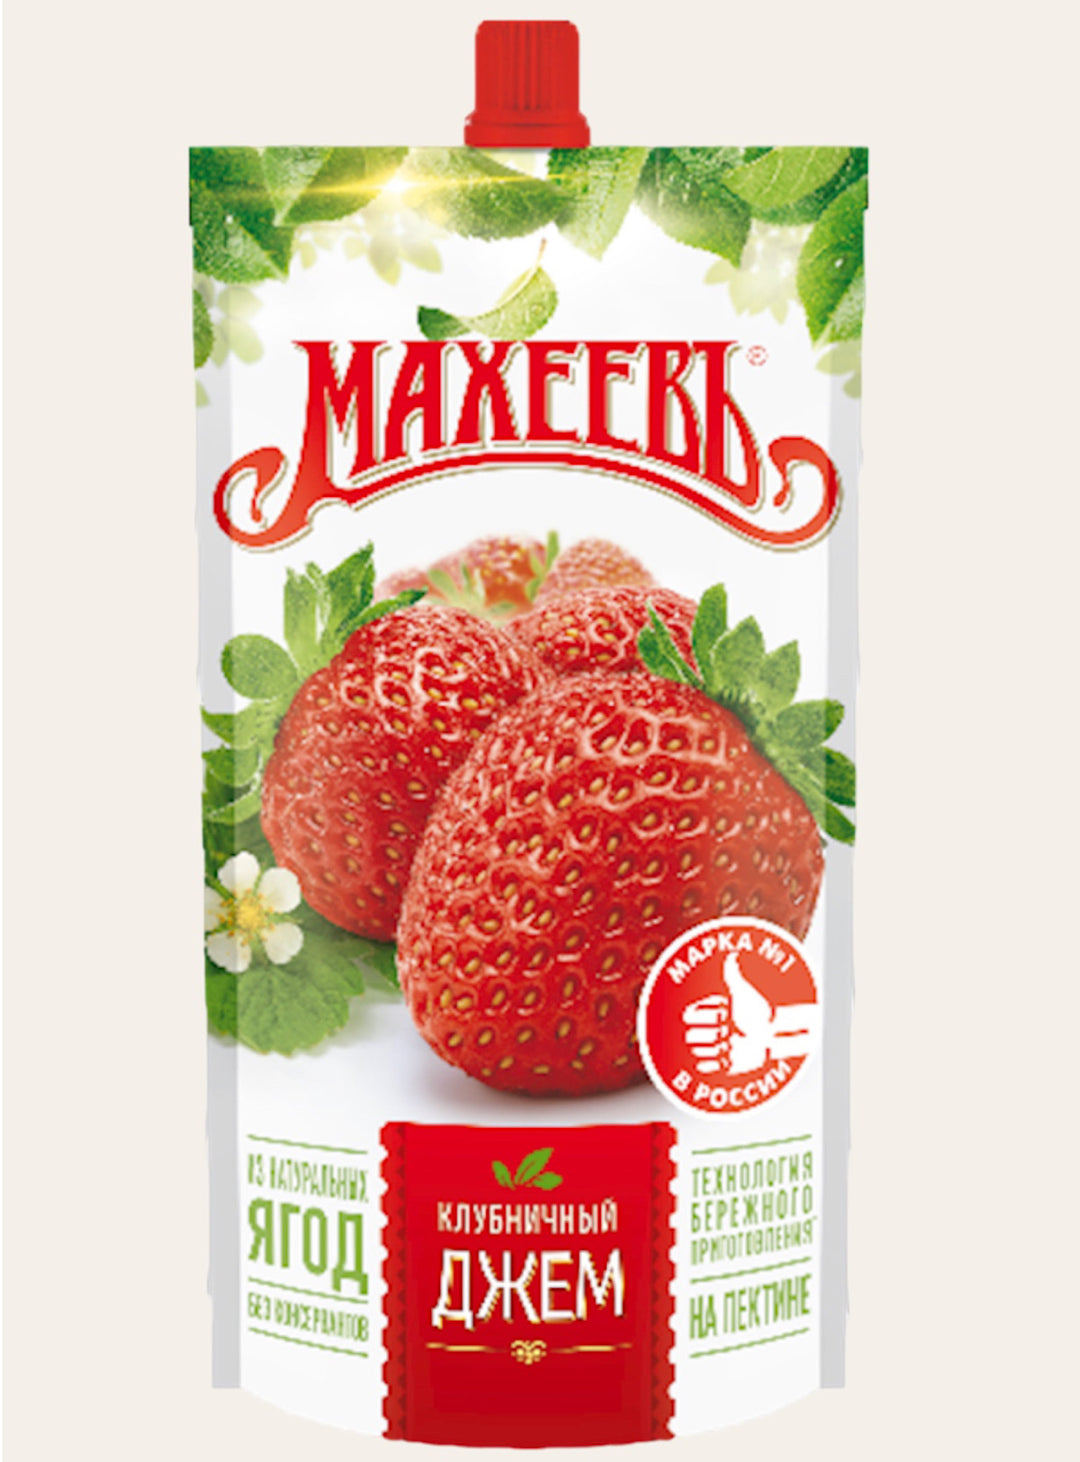 Strawberry Jam - Maheev - 300g